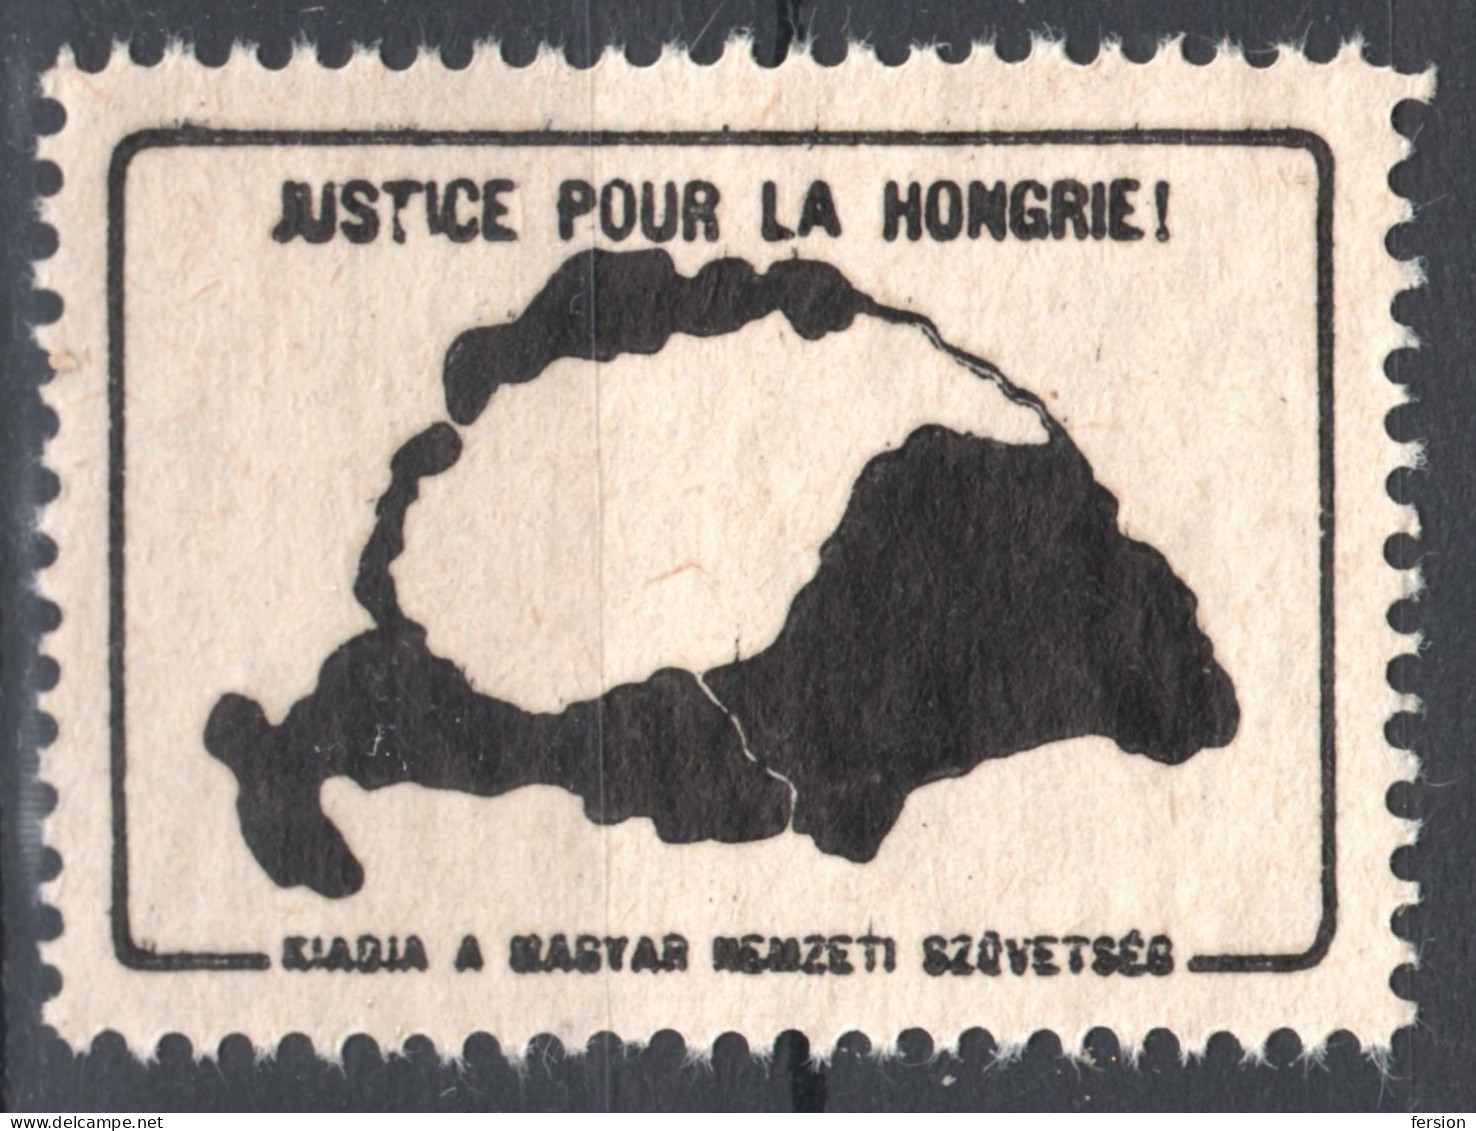 FRANCE WW1 Trianon Map Revisionism Hungary LABEL CINDERELLA VIGNETTE Occupation SHS Serbia Romania Transylvania Croatia - Used Stamps